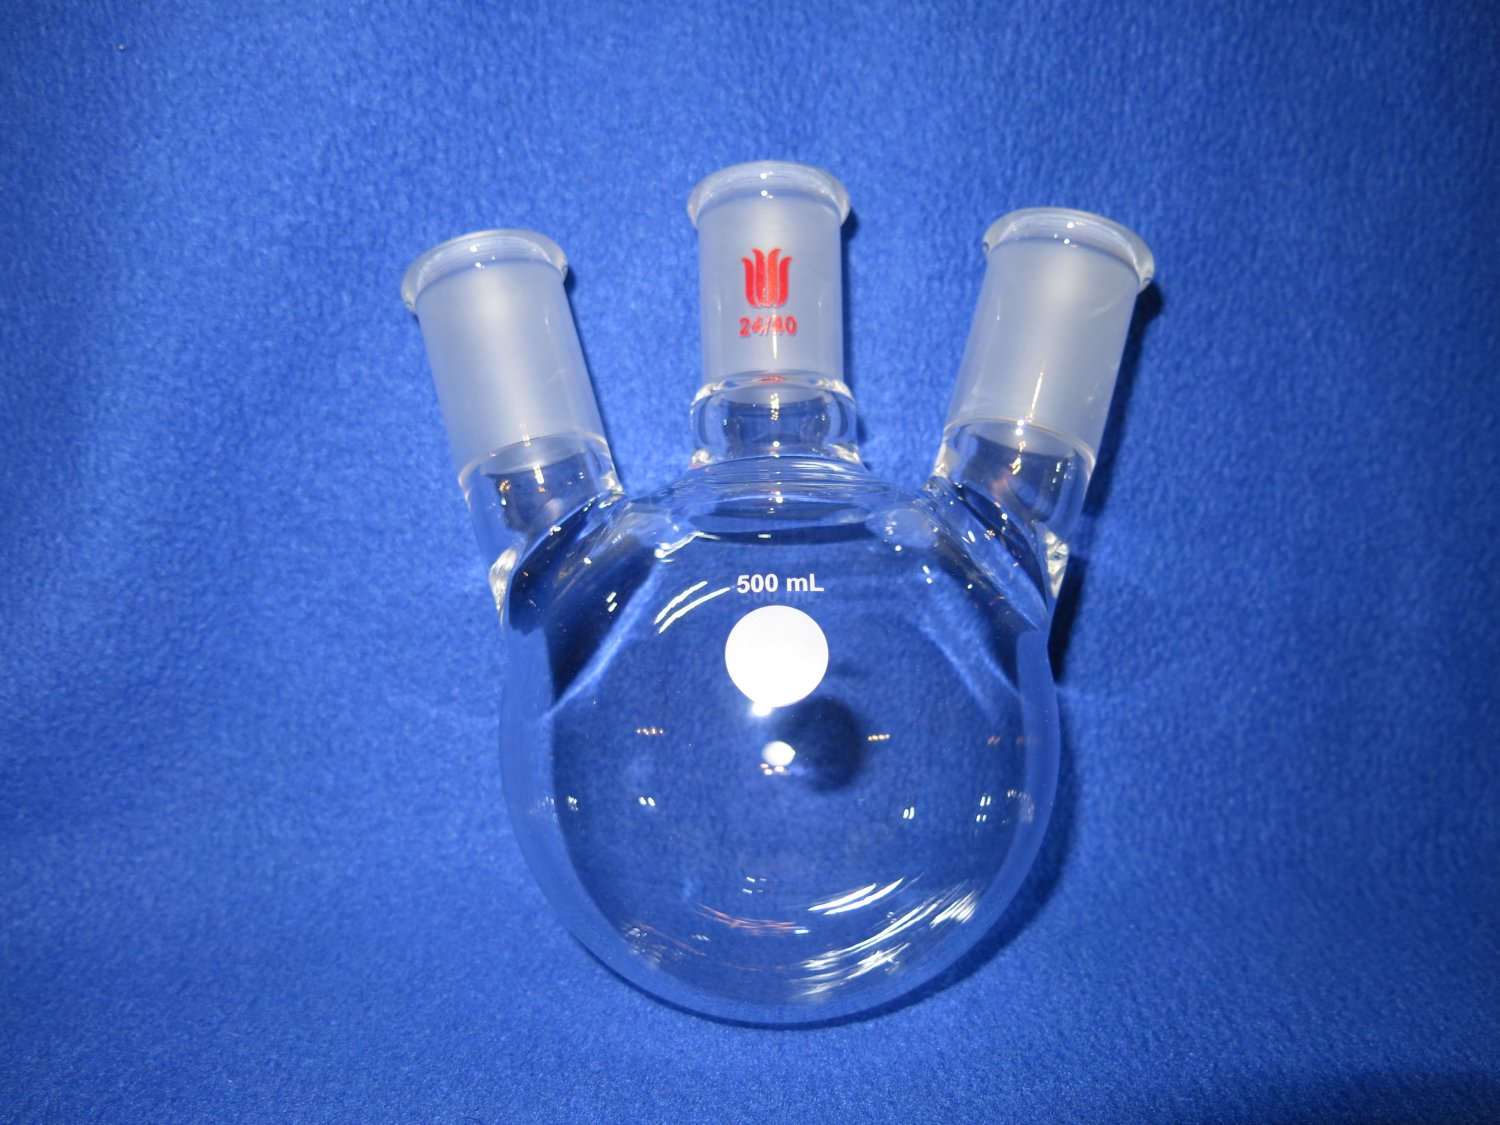 Premium 3-neck Round bottom boiling flask: 24/40, 500ml, angled